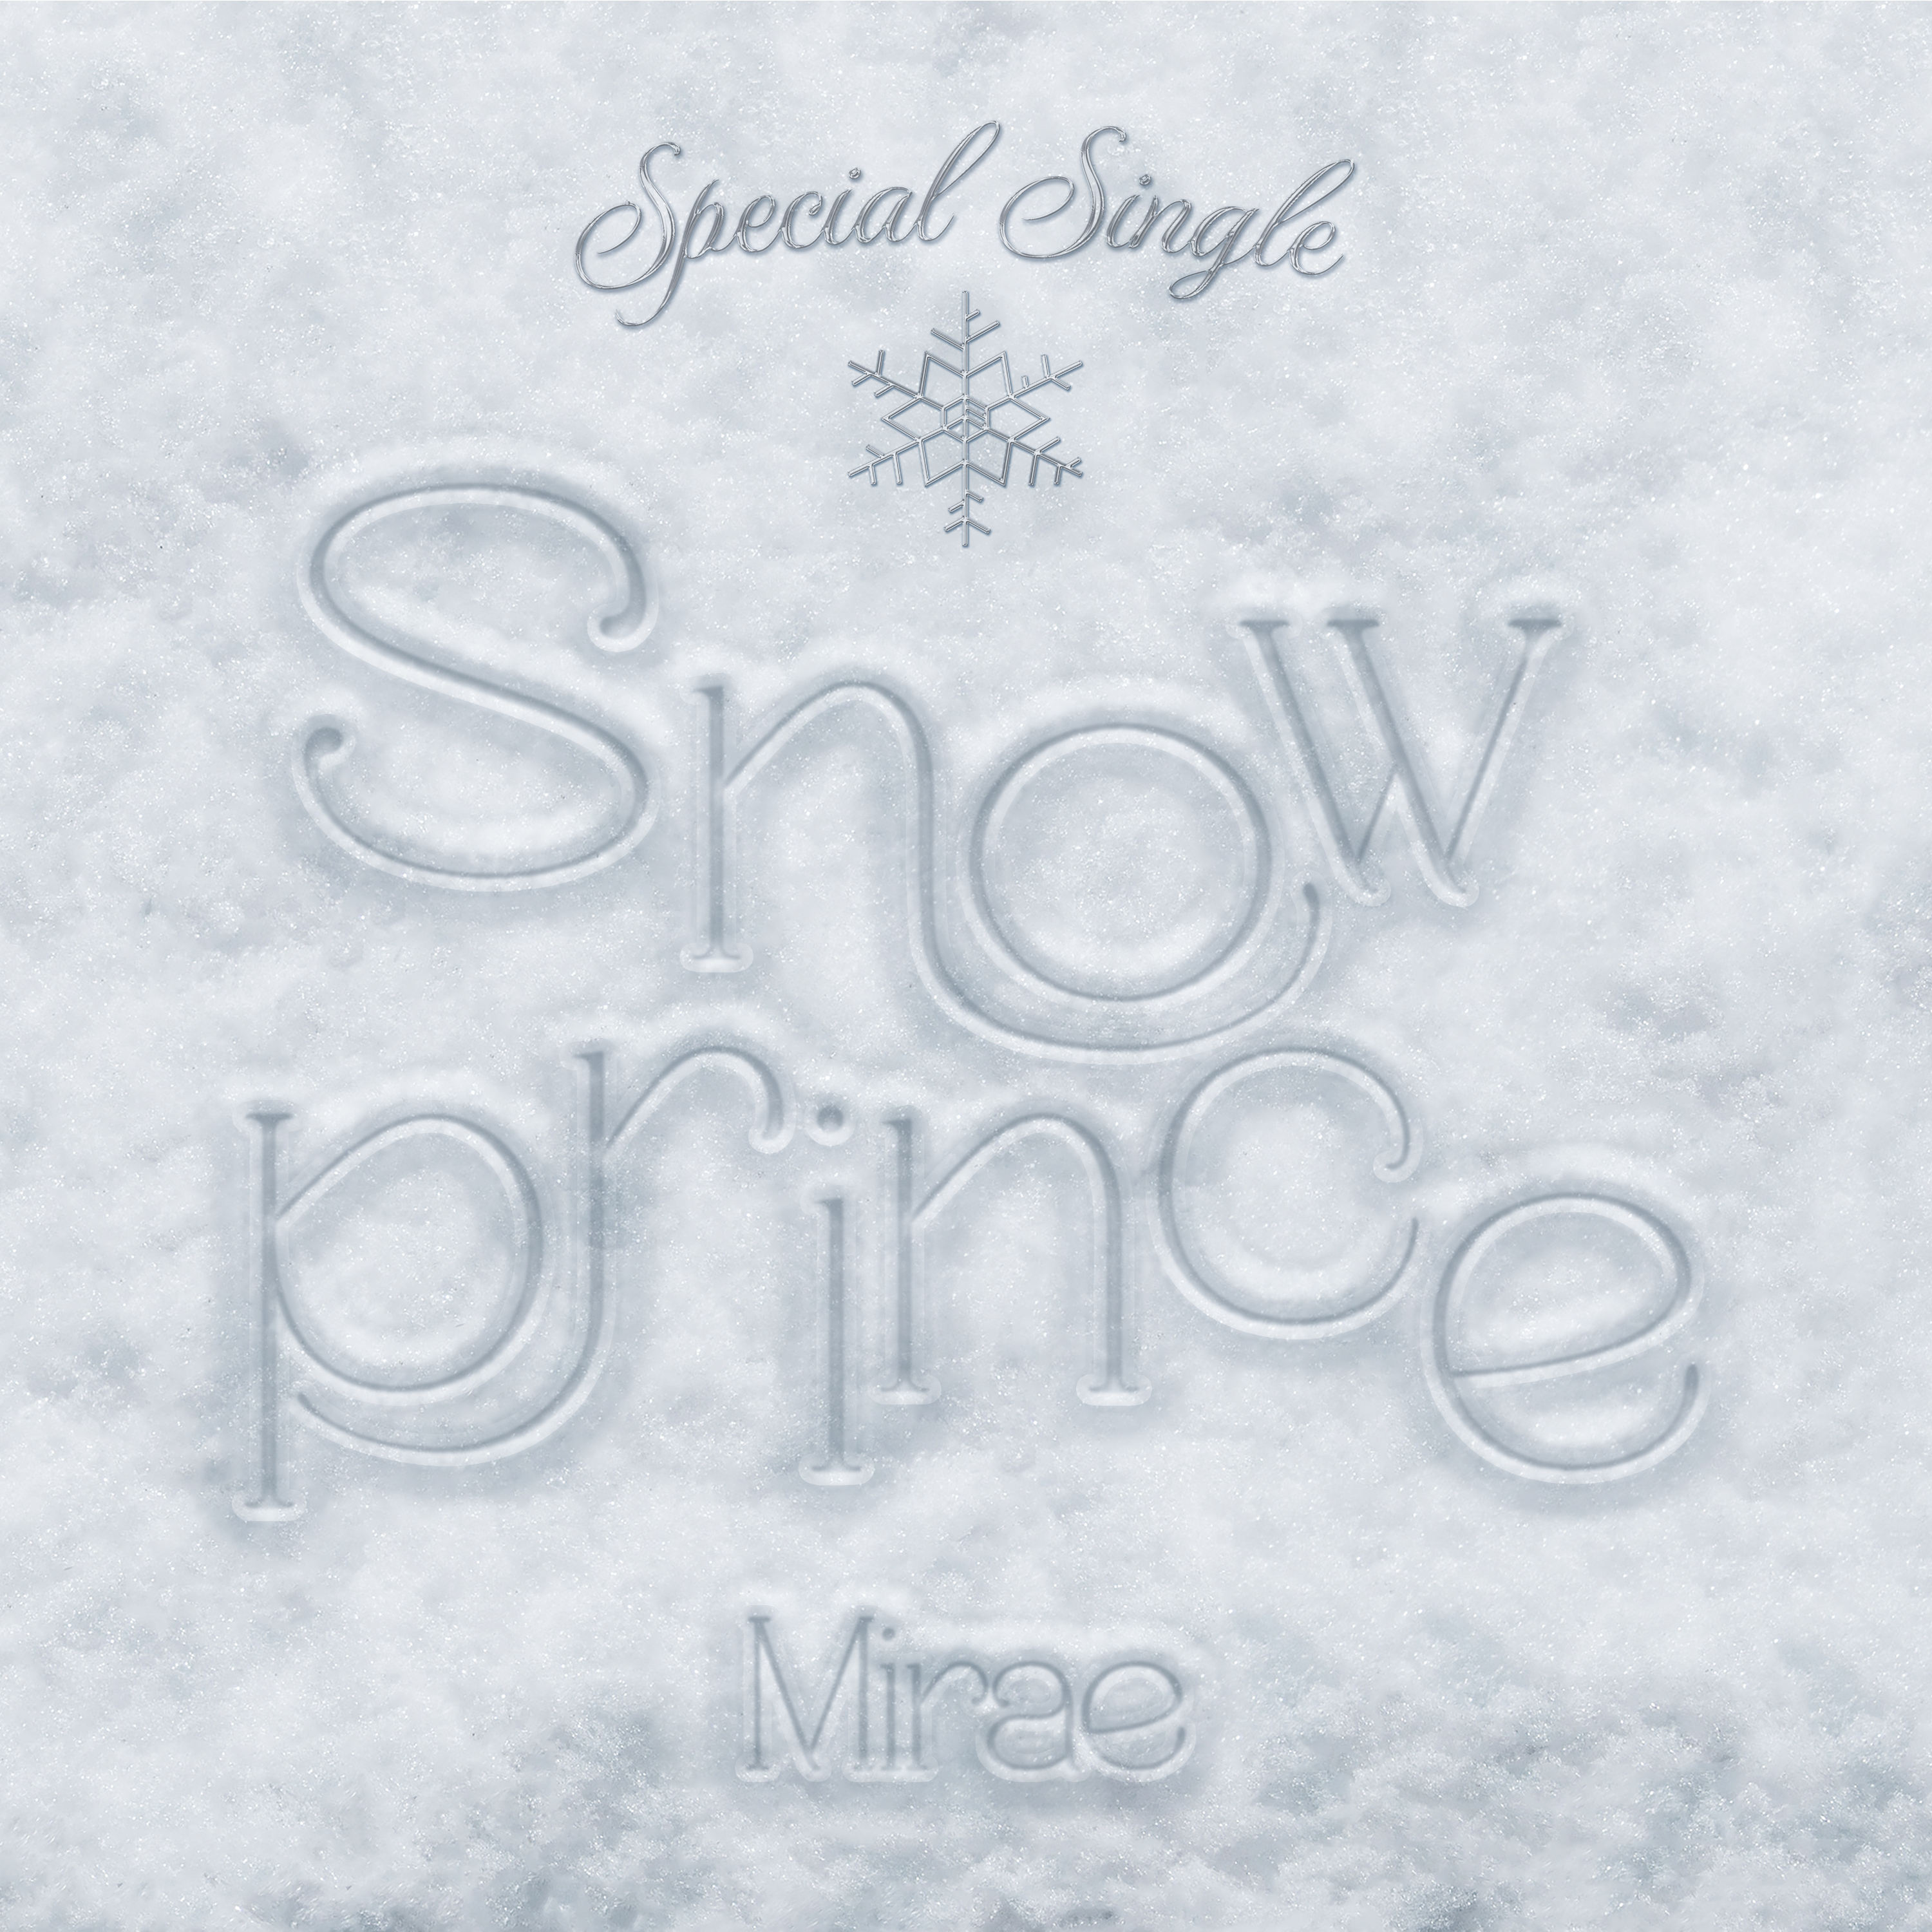 [情報] Snow Prince - MIRAE Special Single